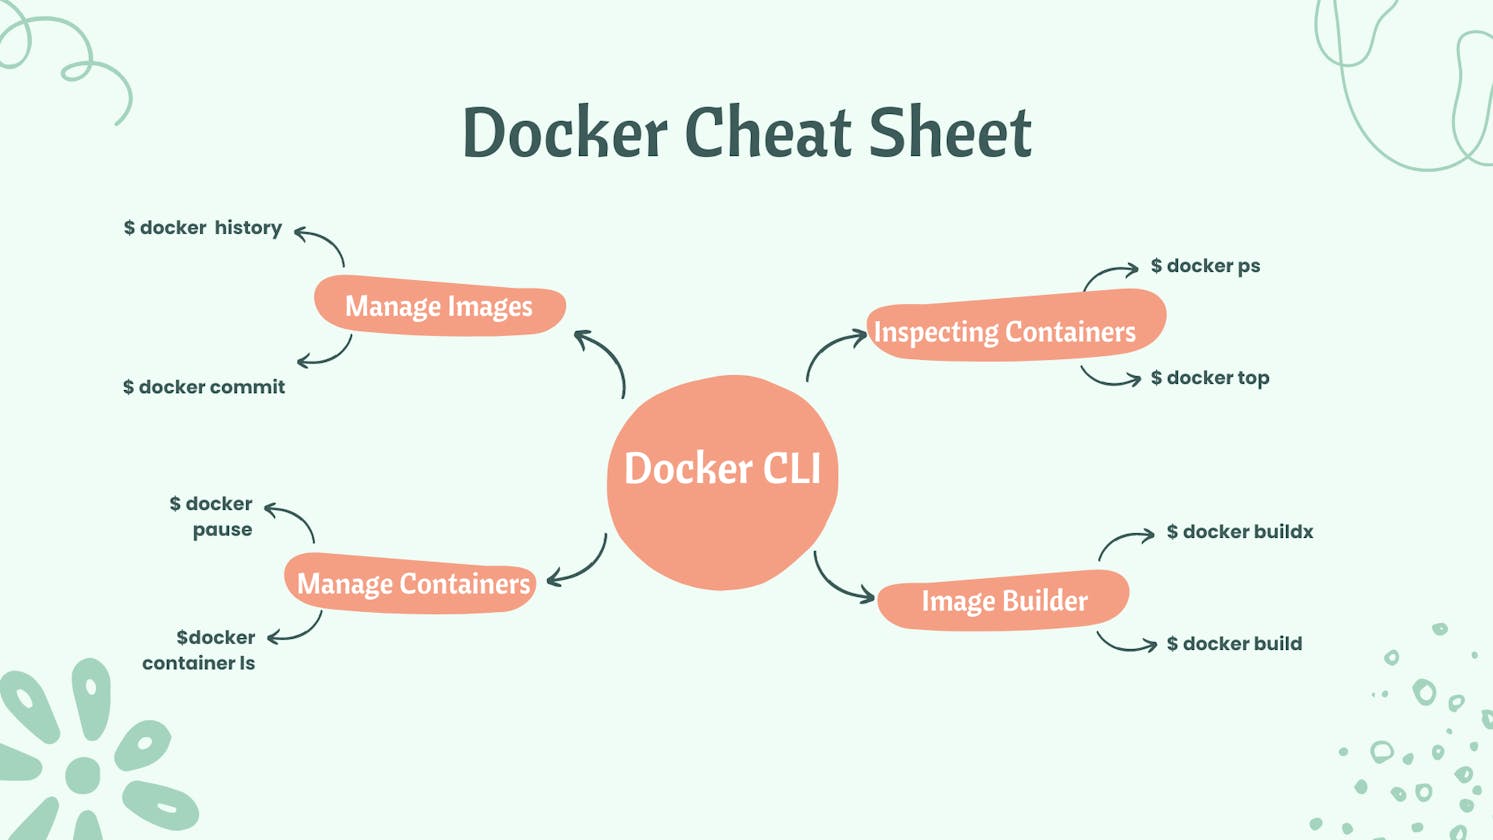 #Day20 - Docker Cheat Sheet